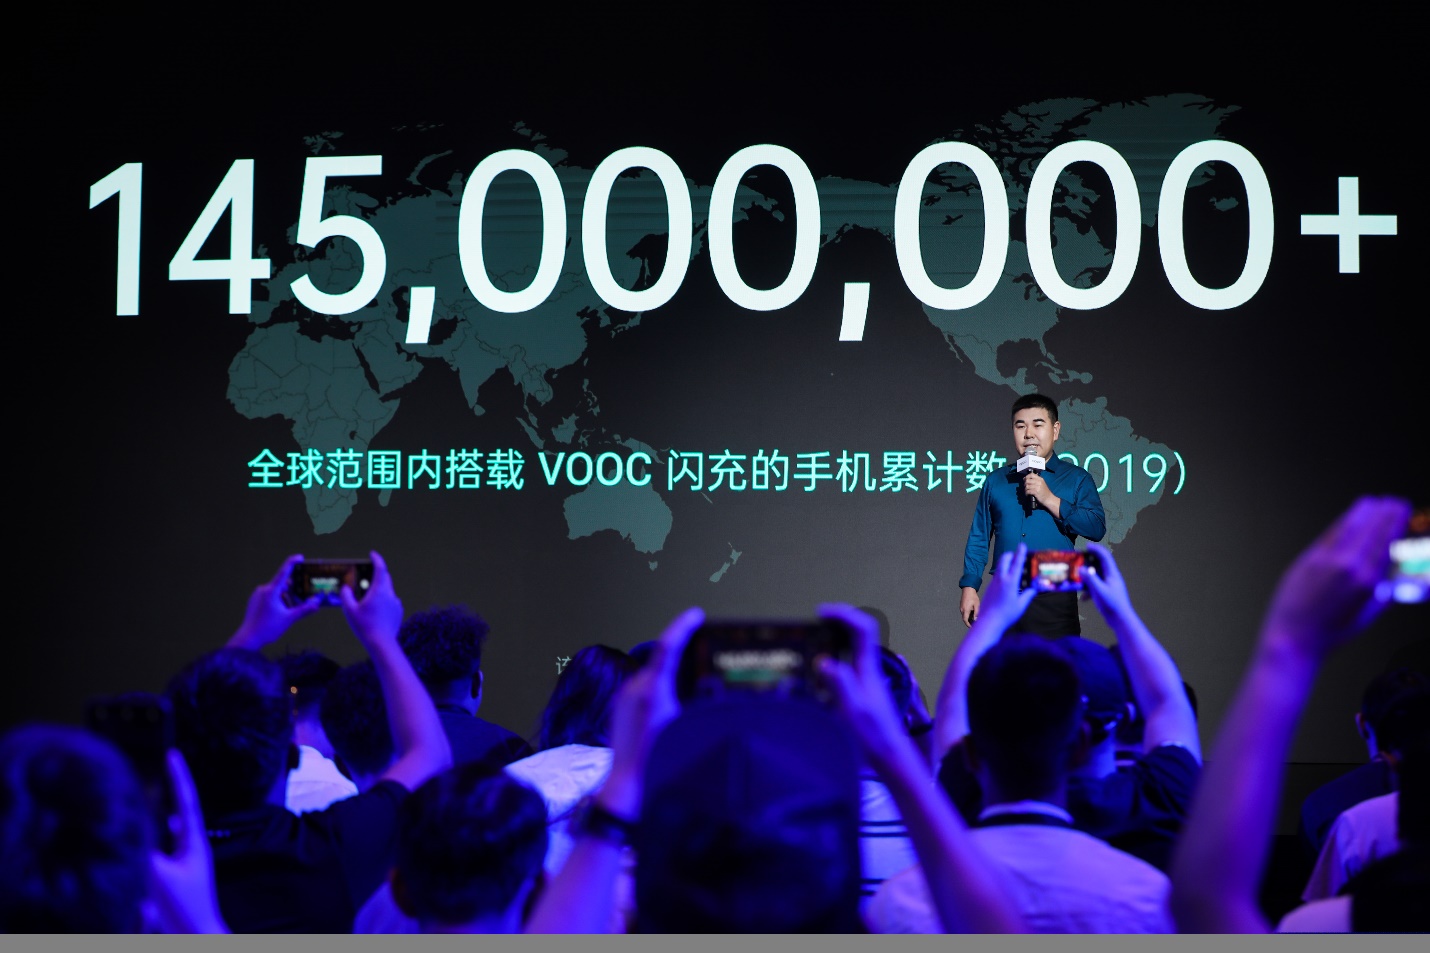 C:\Users\chuleekon.v\Desktop\VOOC\Zhang Jialiang delivers a keynote speech at the event 2.jpg